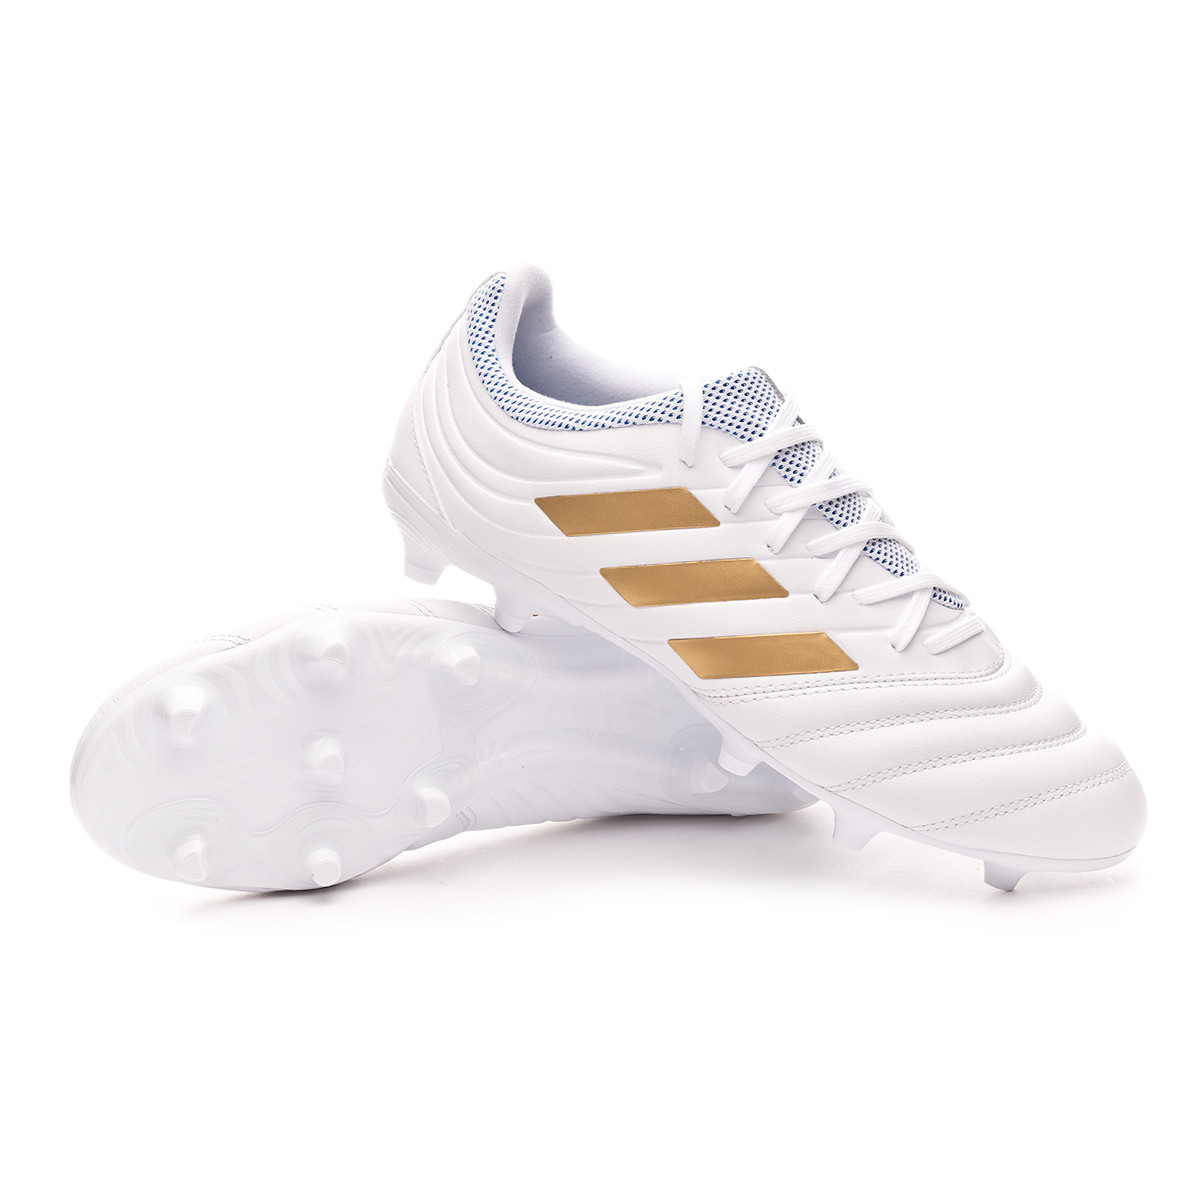 Football Boots adidas Copa 19.3 FG 